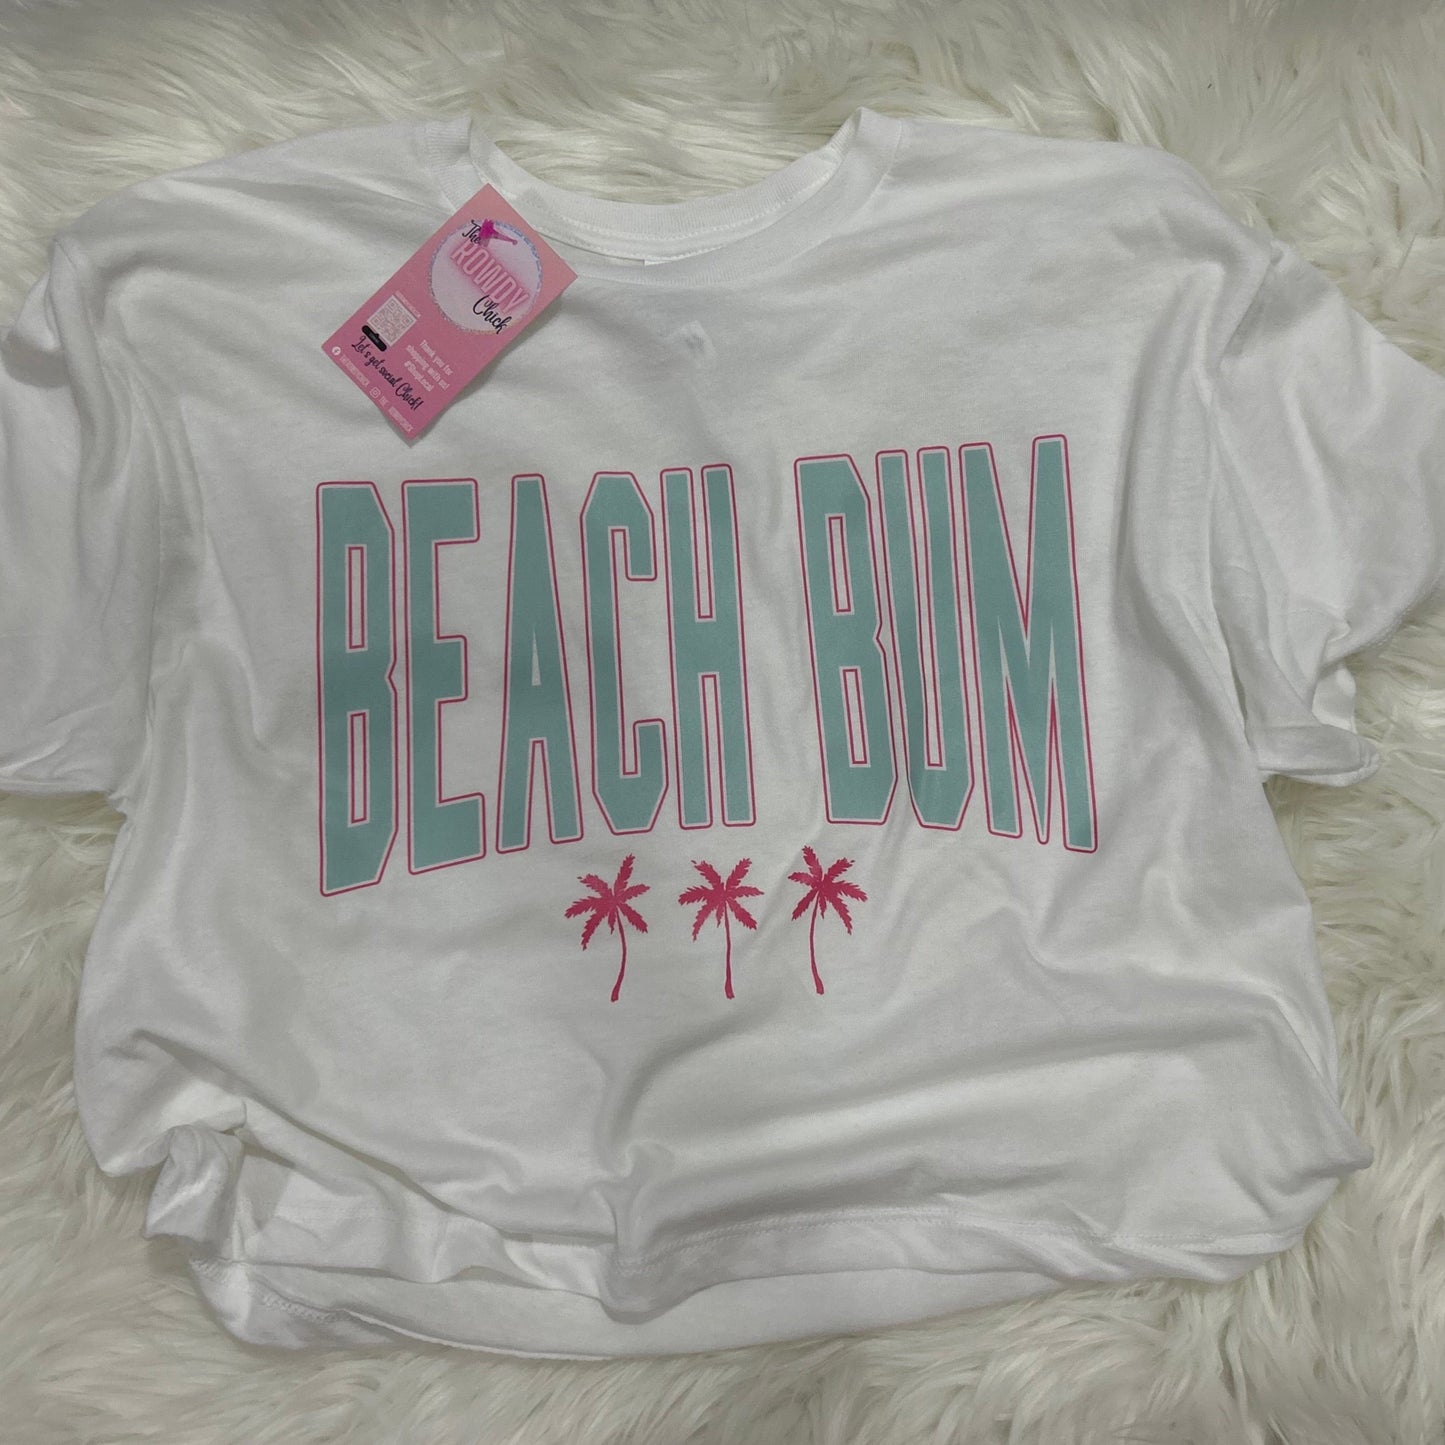 "Beach Bum" T-shirts